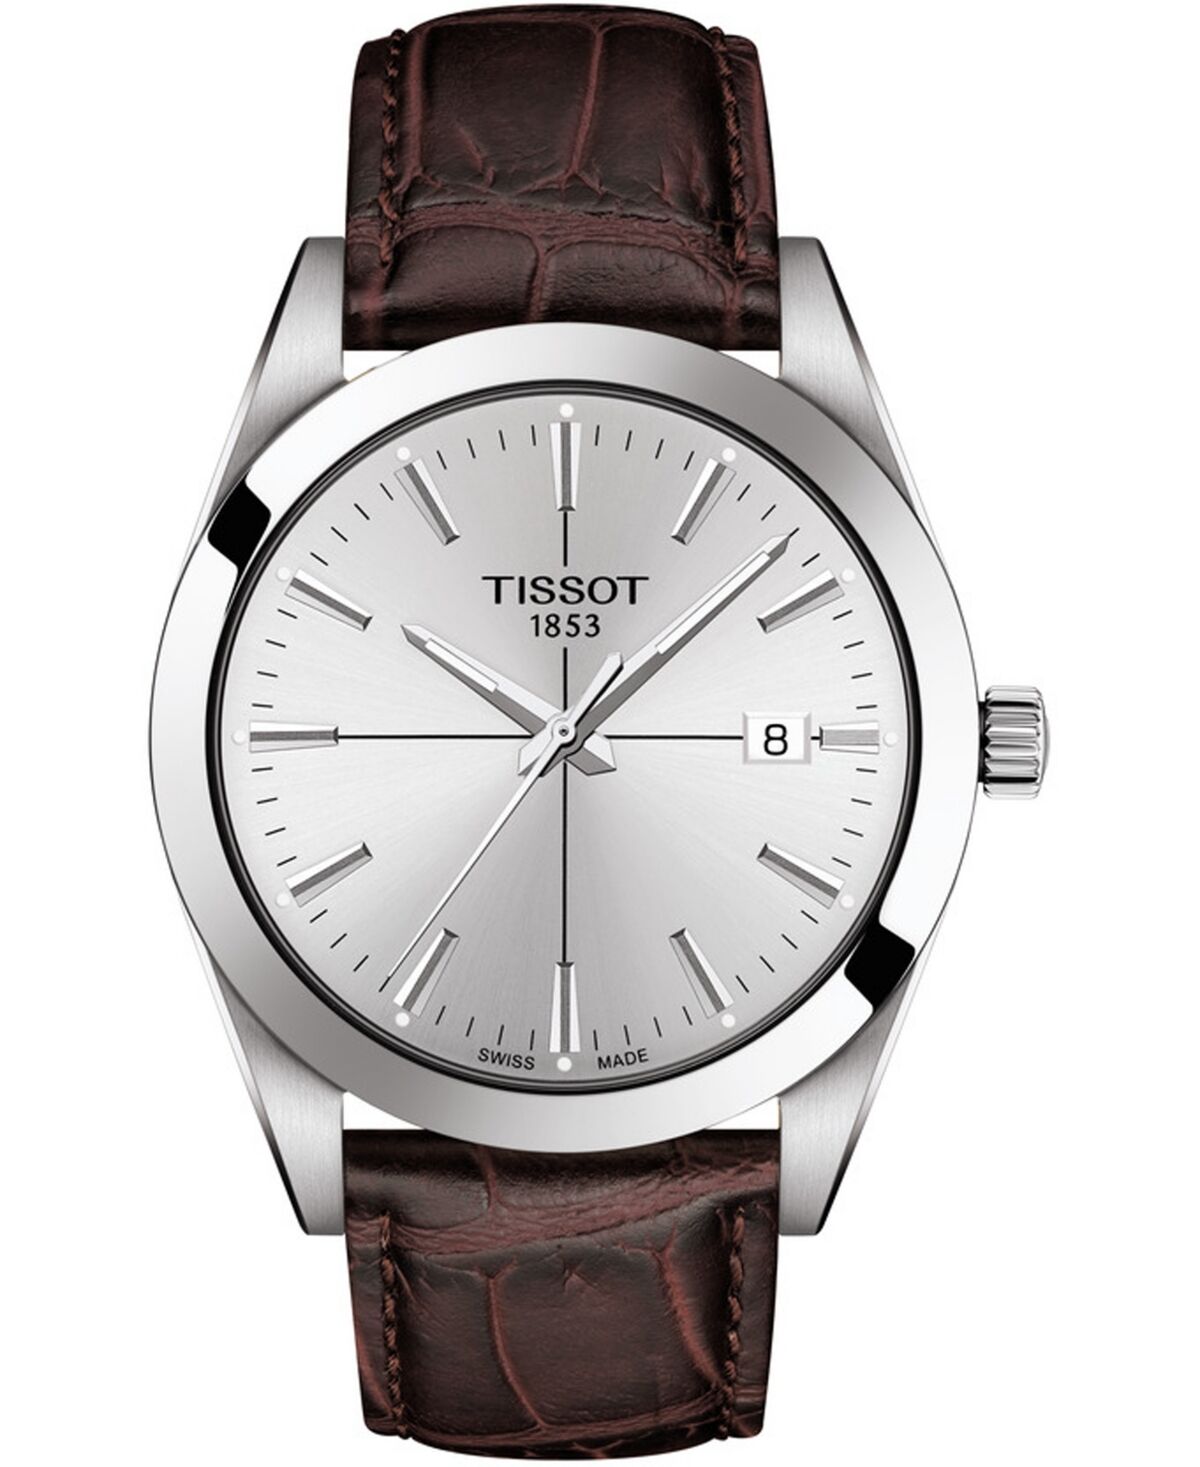 Tissot Men's Swiss Gentleman Brown Leather Strap Watch 40mm - Silver